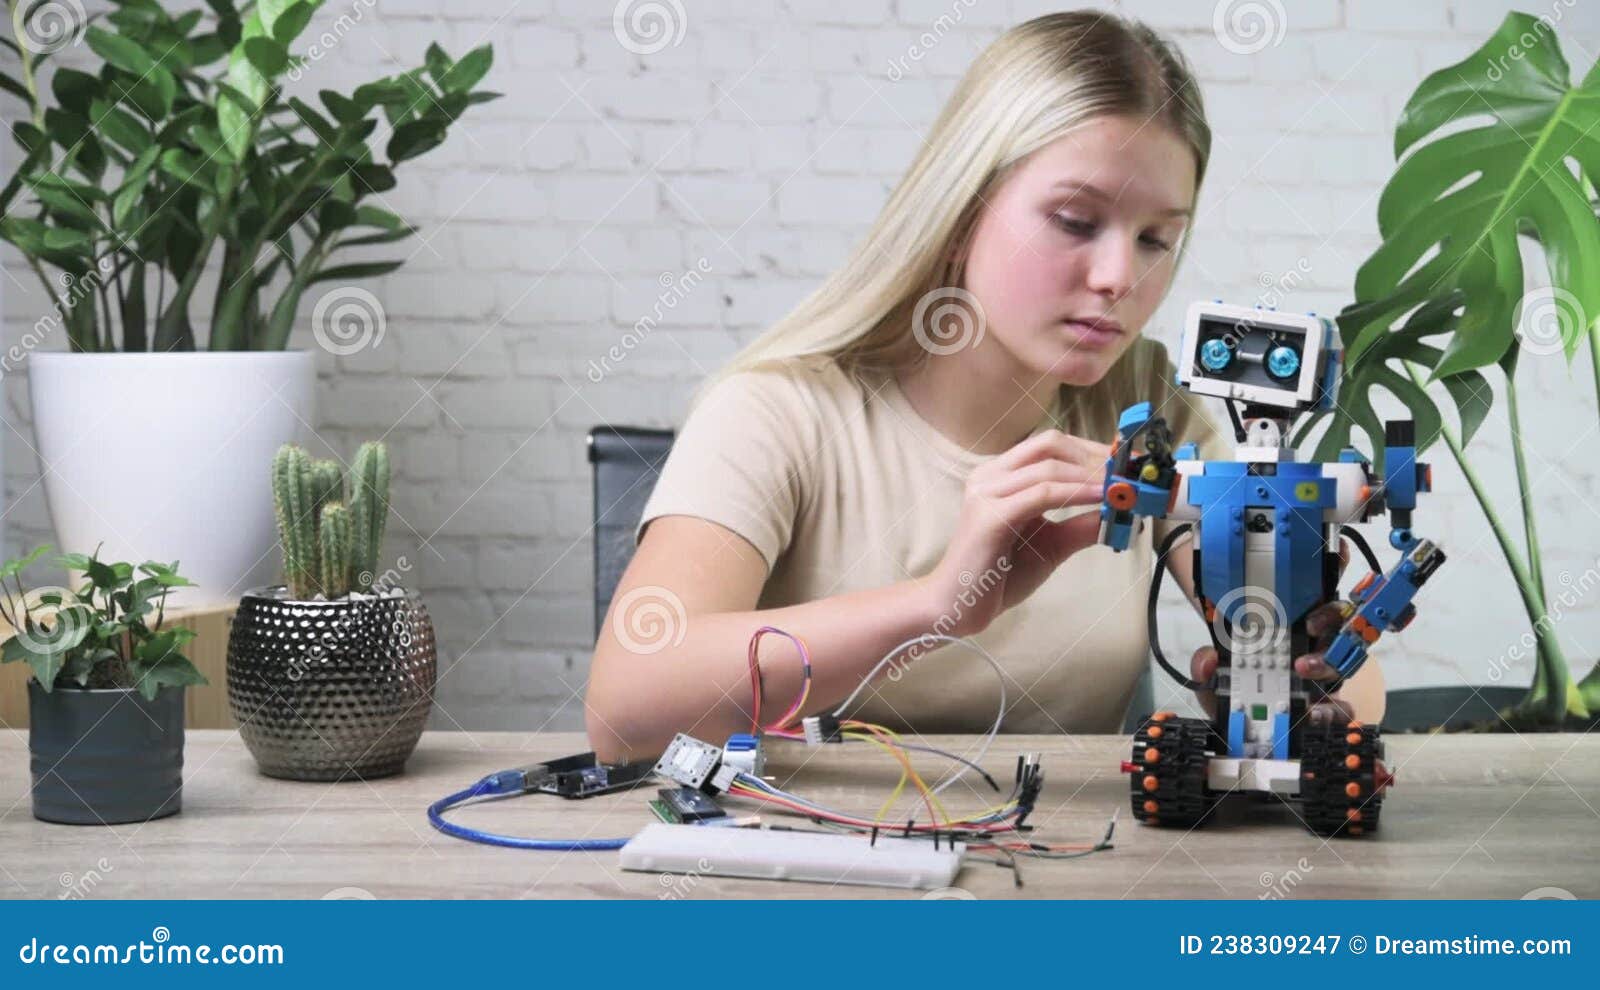 https://thumbs.dreamstime.com/z/blonde-teen-girl-building-programming-robot-studying-robotics-engineering-coding-stem-courses-children-238309247.jpg